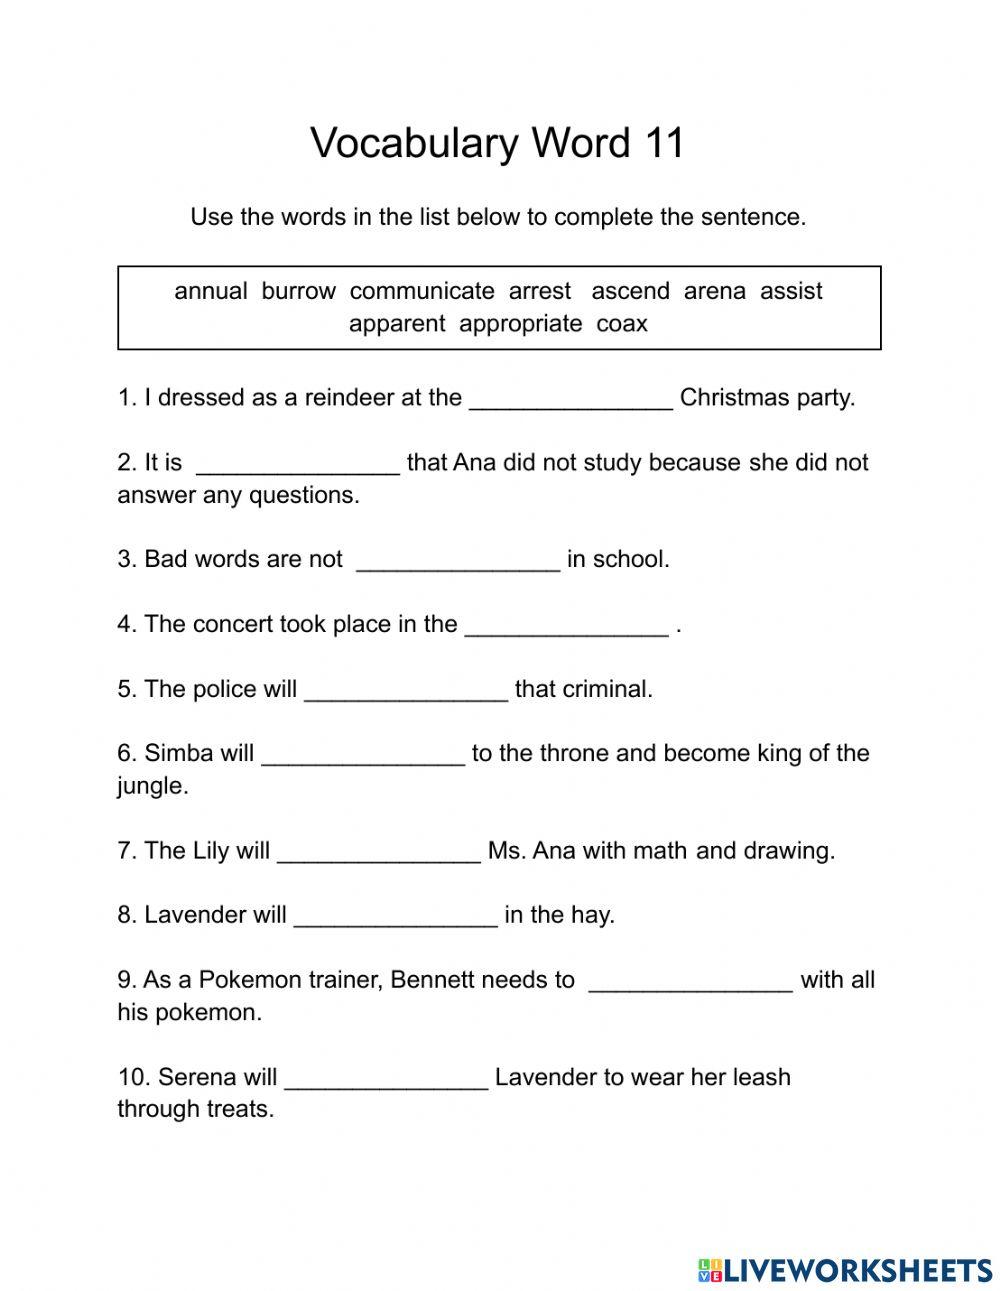 Vocabulary Word 11